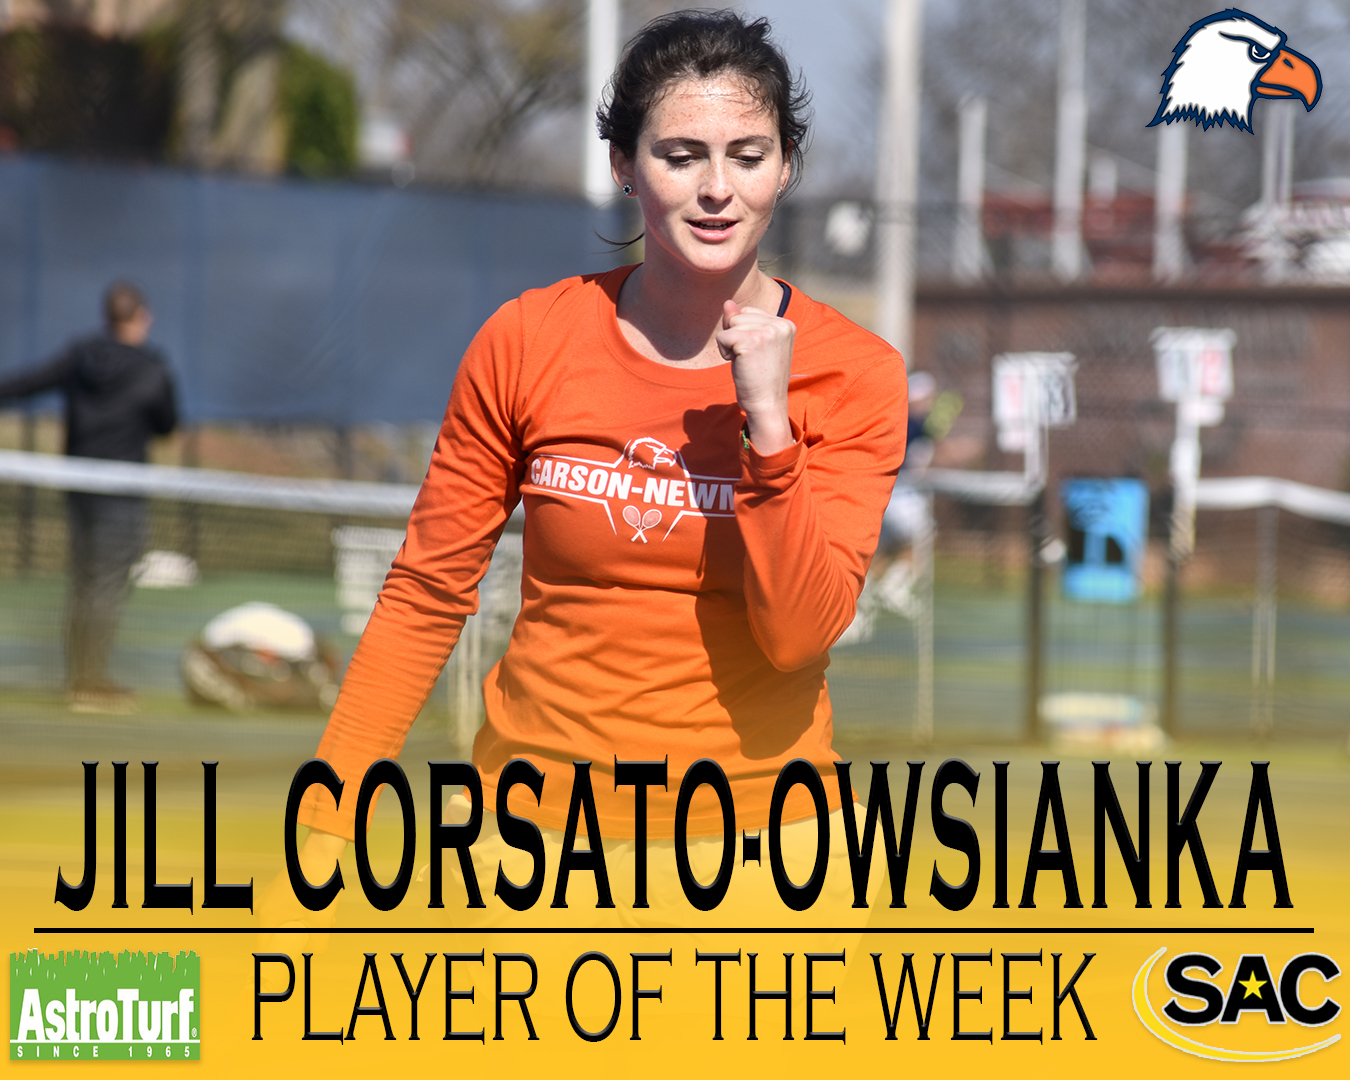 Corsato-Owsianka nets SAC AstroTurf Player of the Week honor